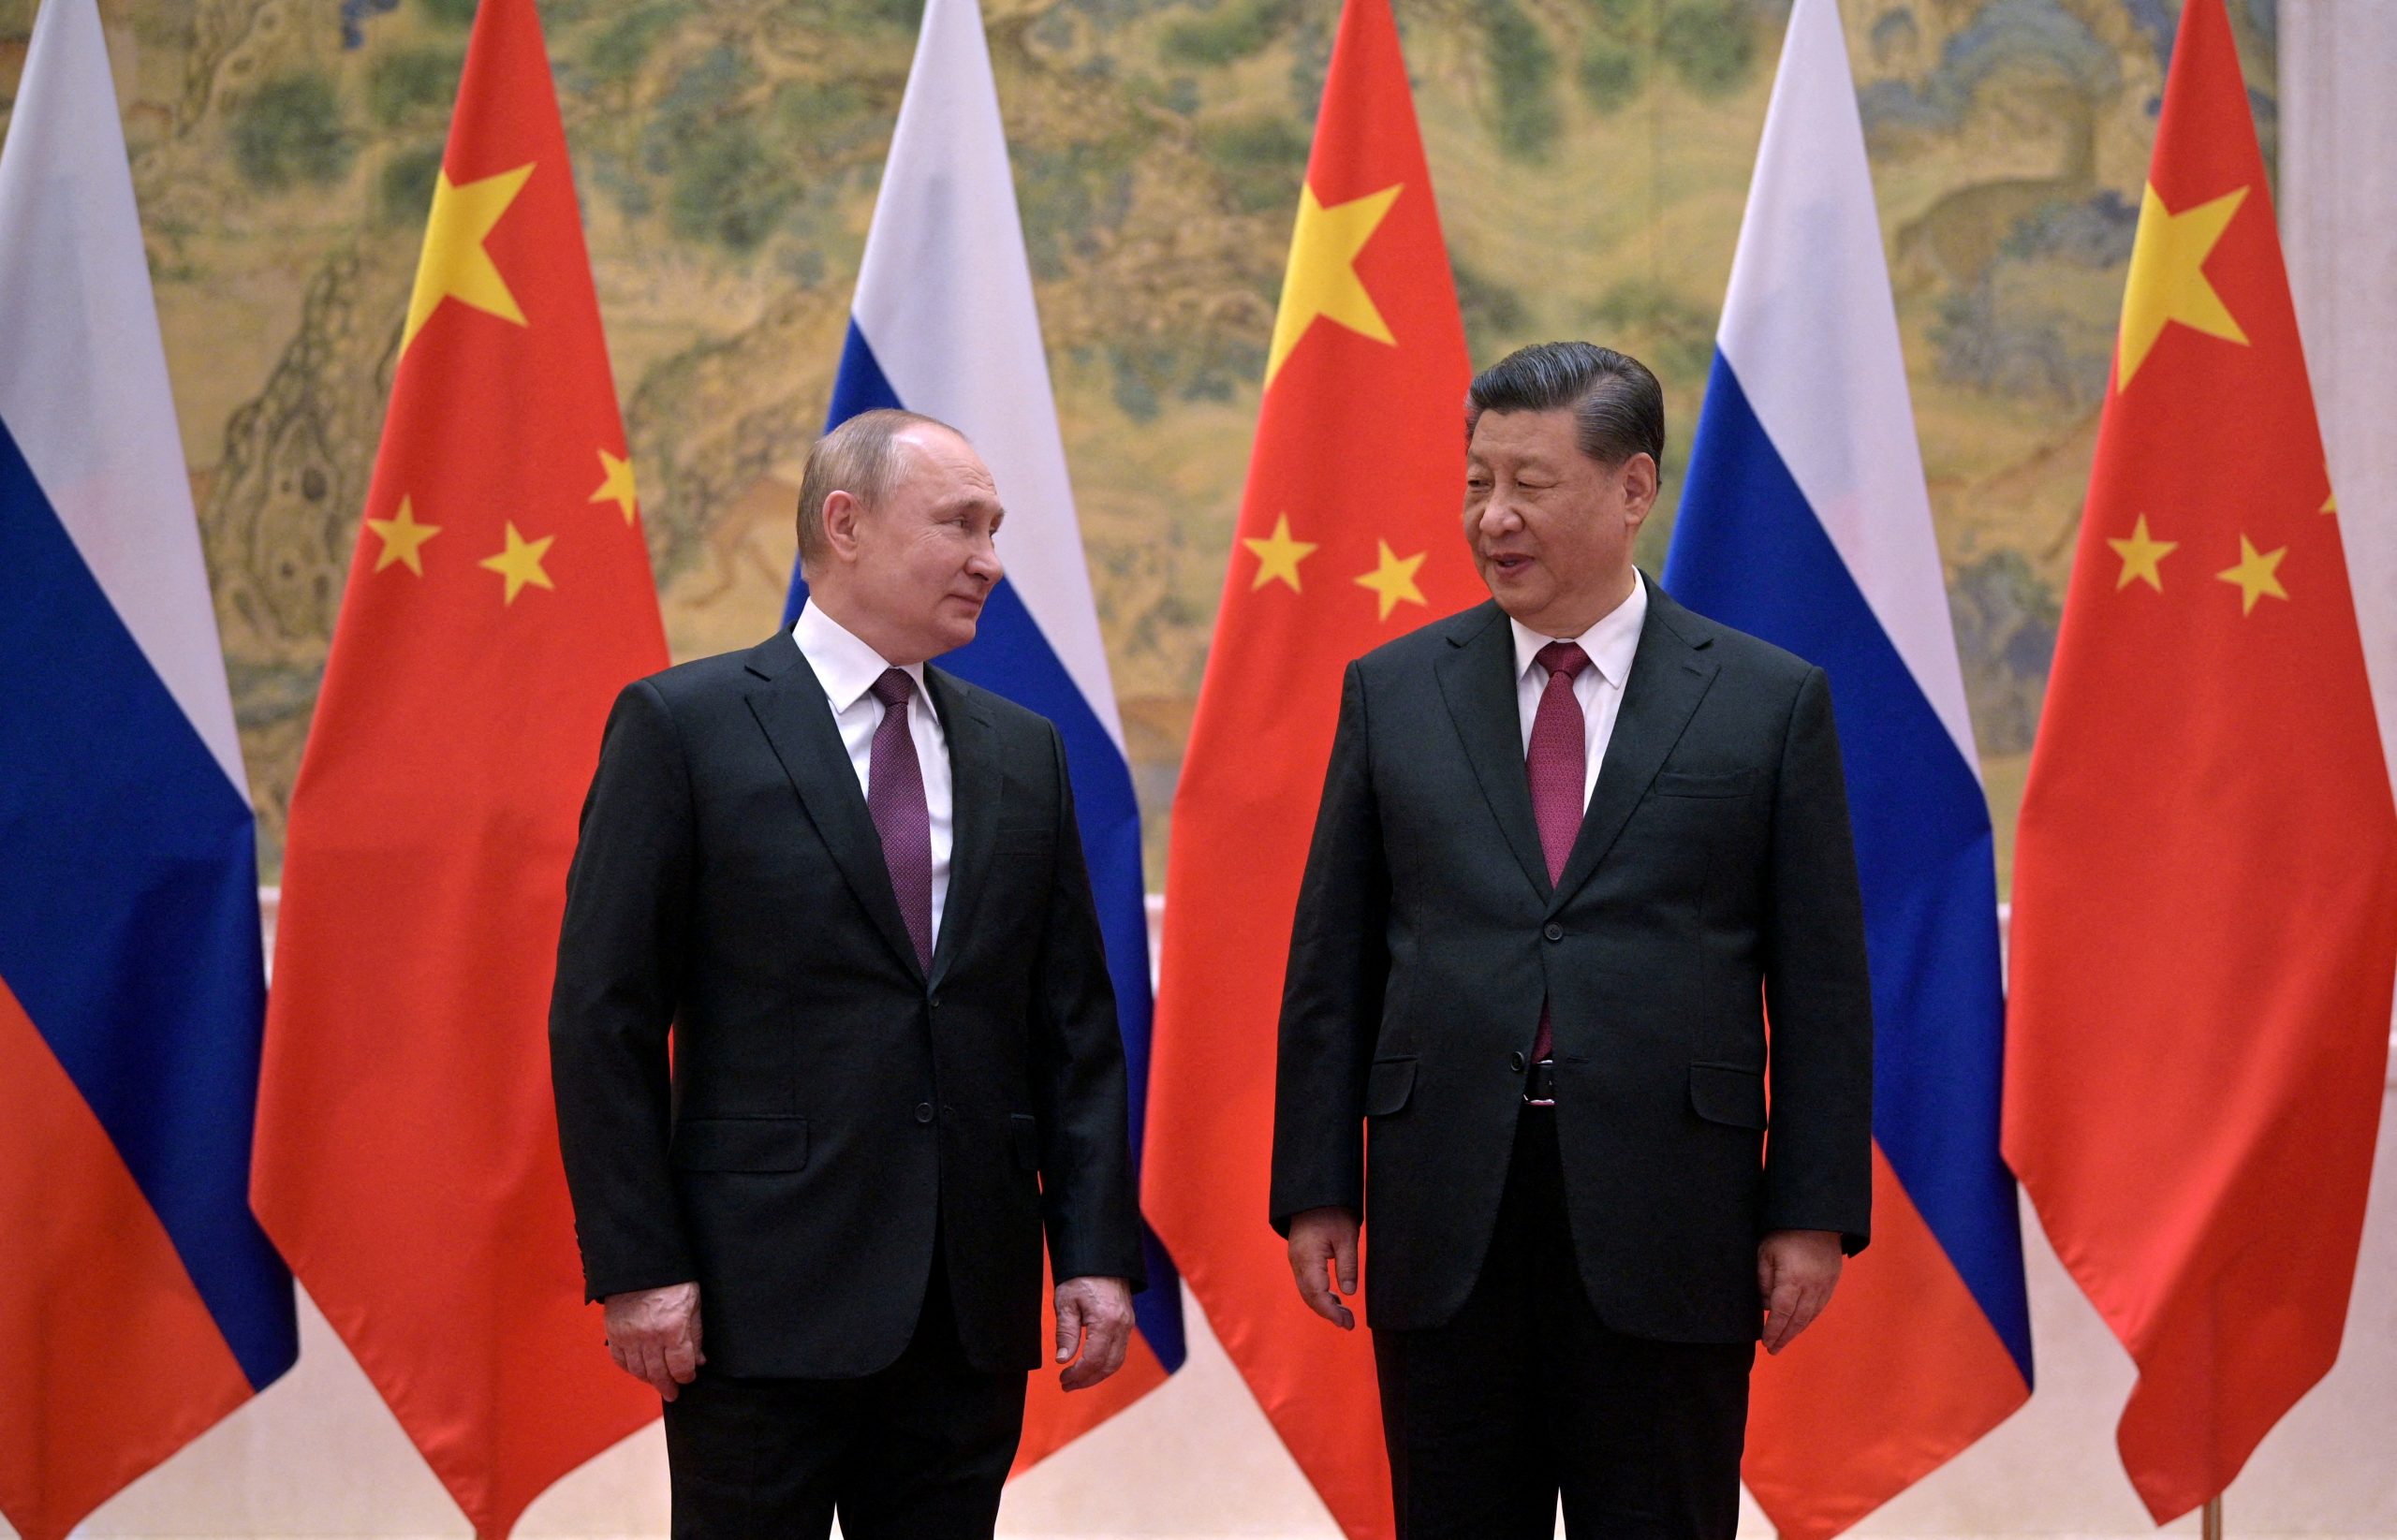 Photo: Russian President Vladimir Putin attends a meeting with Chinese President Xi Jinping in Beijing, China February 4, 2022. Credit: Sputnik/Aleksey Druzhinin/Kremlin via REUTERS